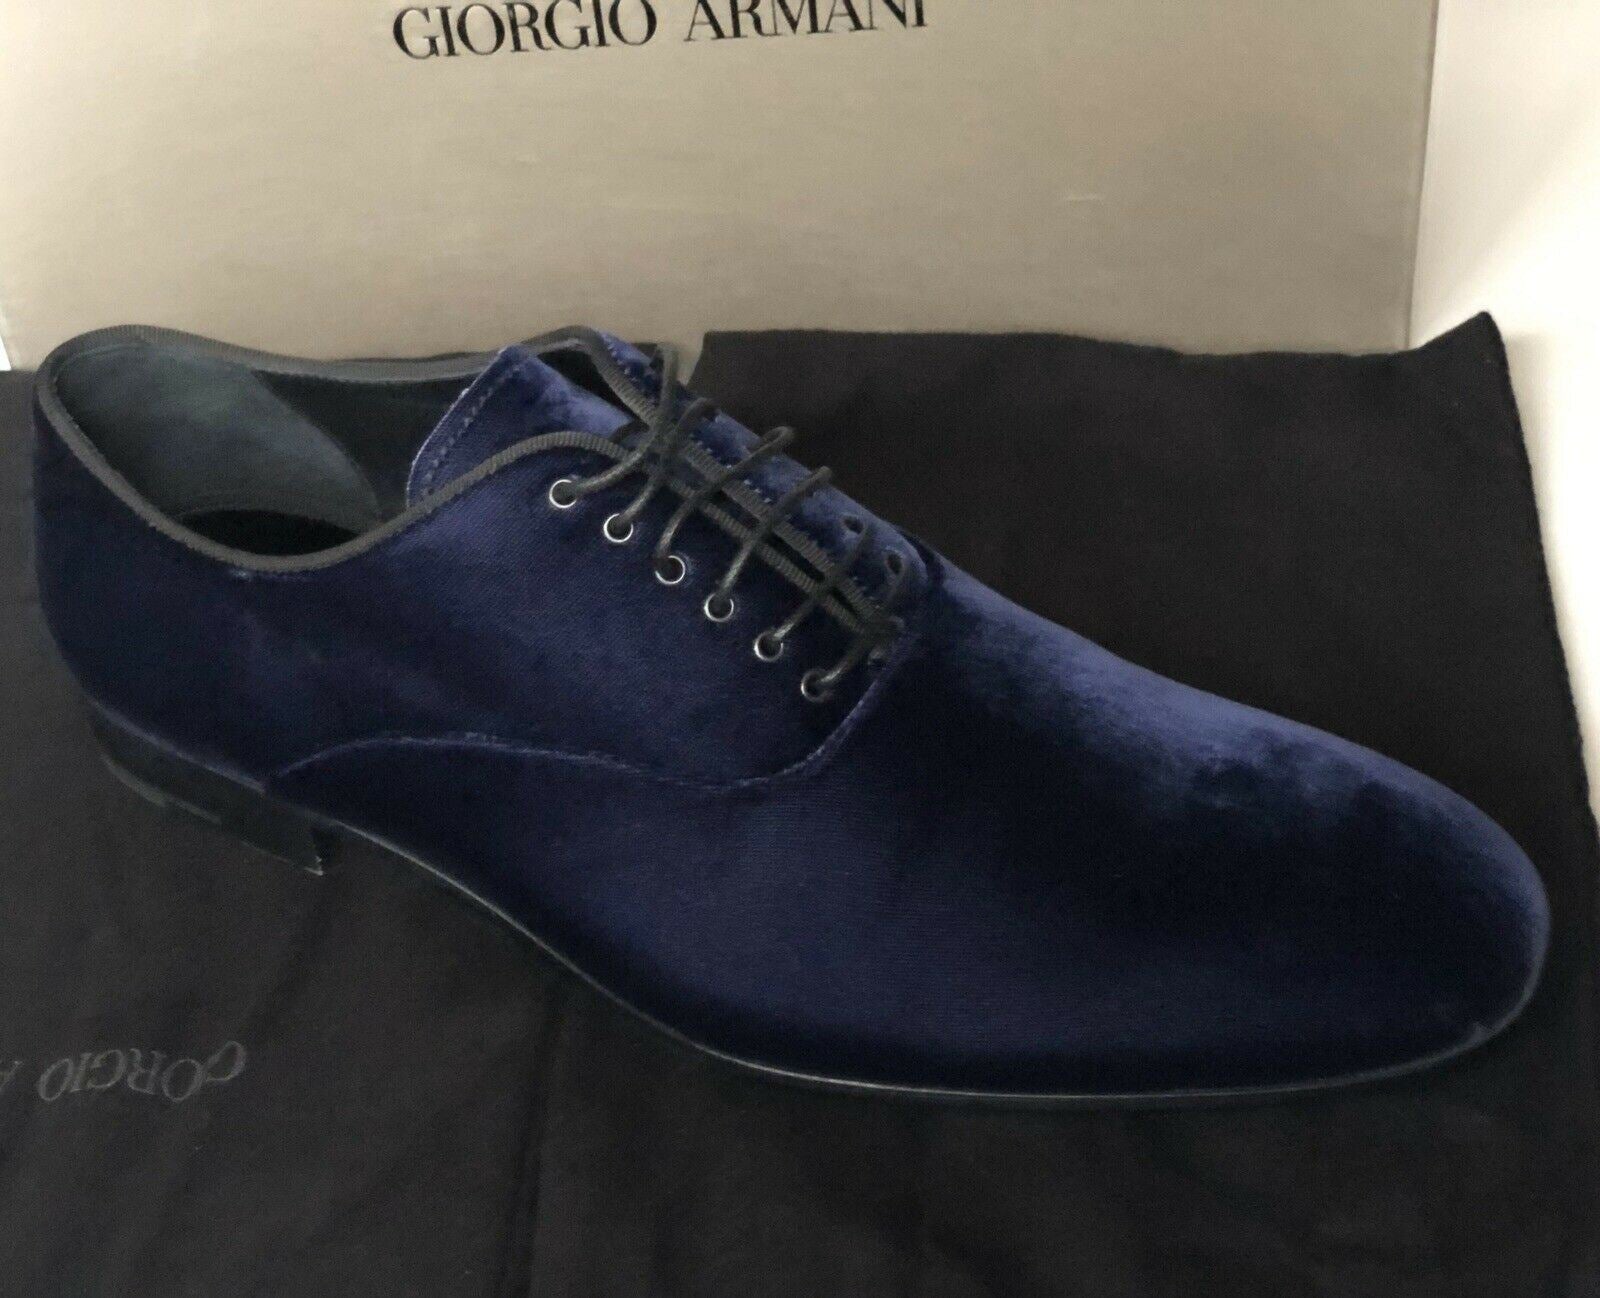 giorgio armani oxford shoes